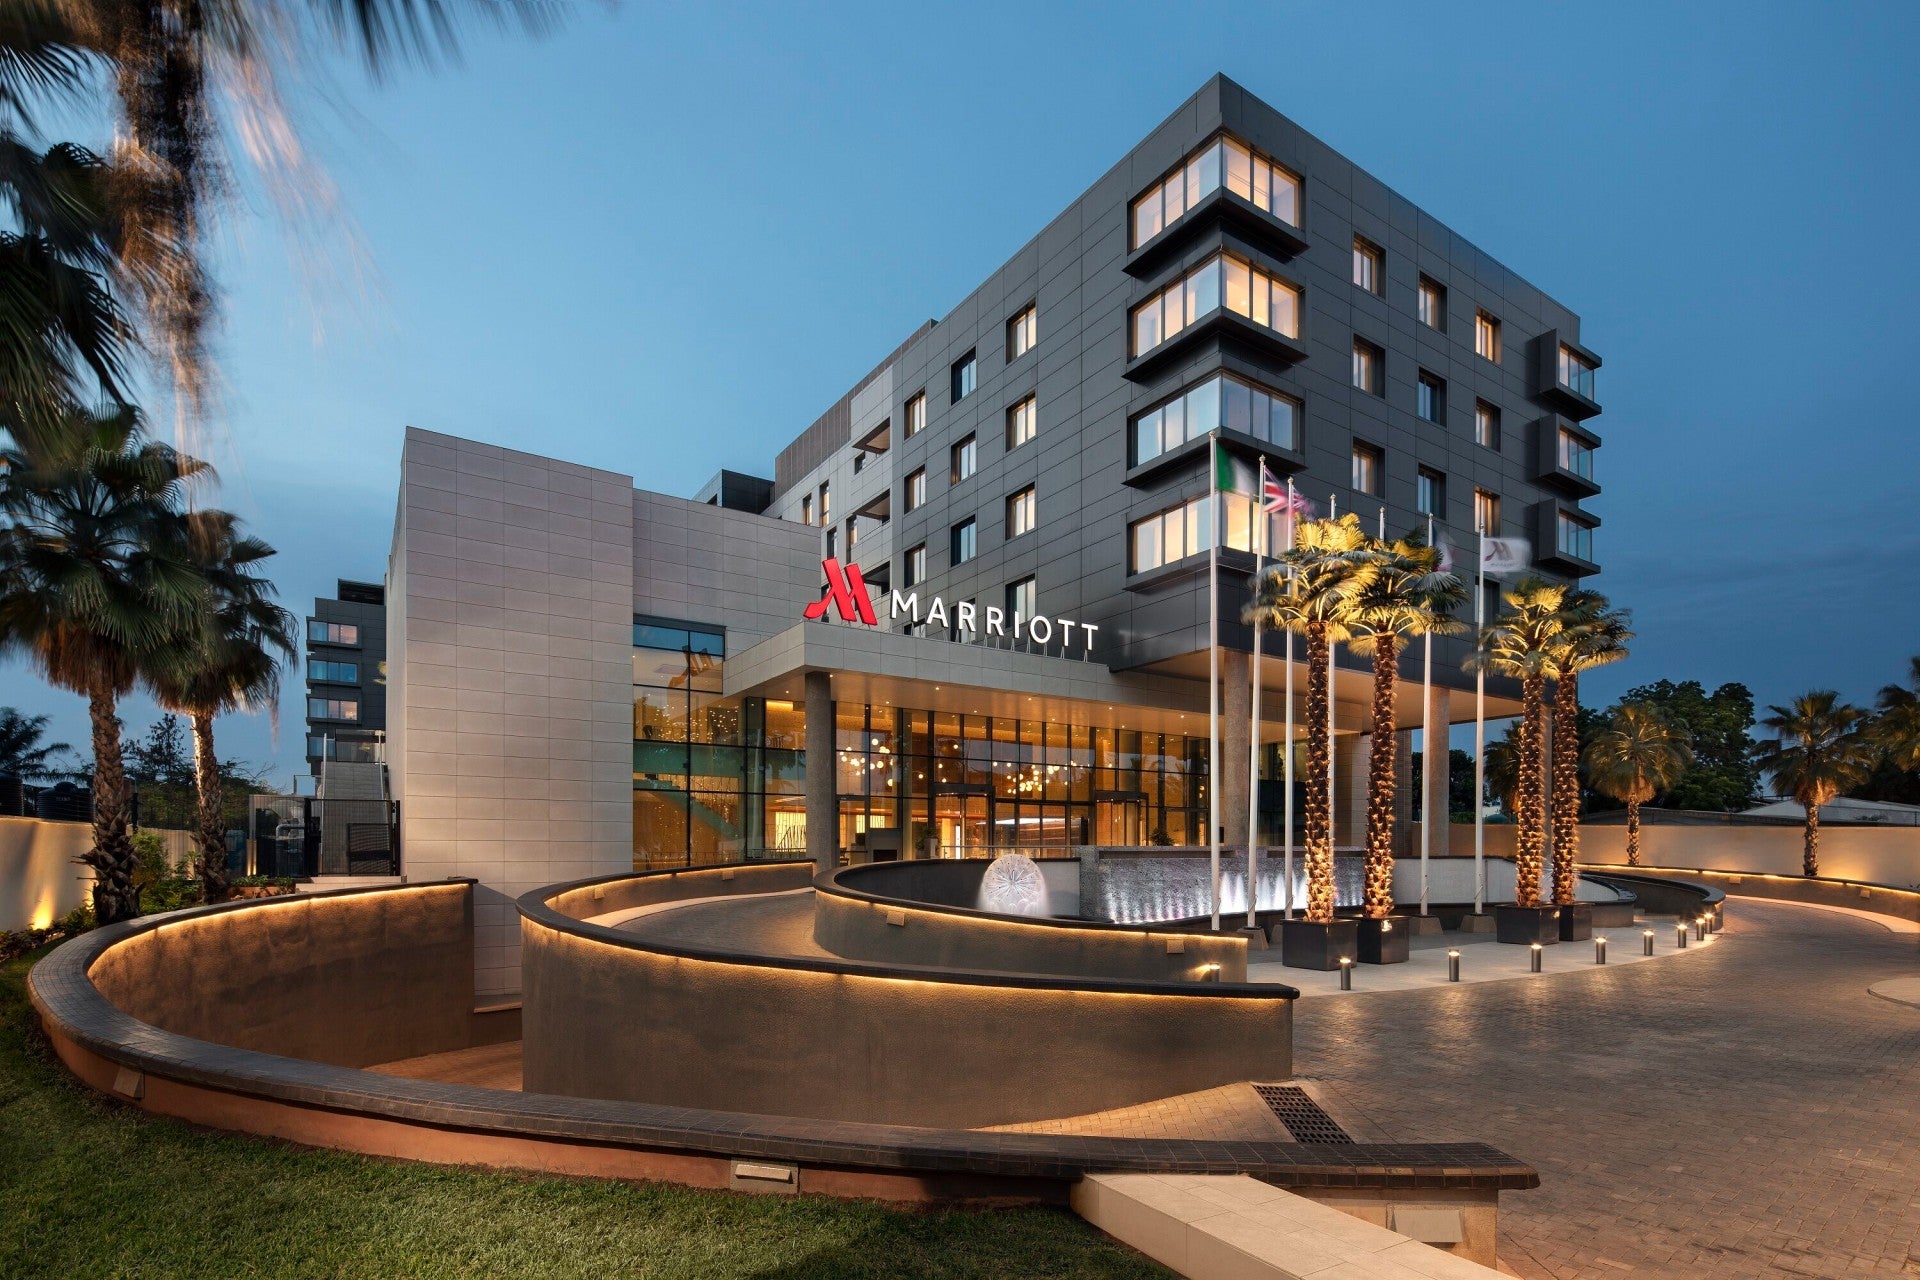 Marriott Hotels brand debuts in Lagos, Nigeria